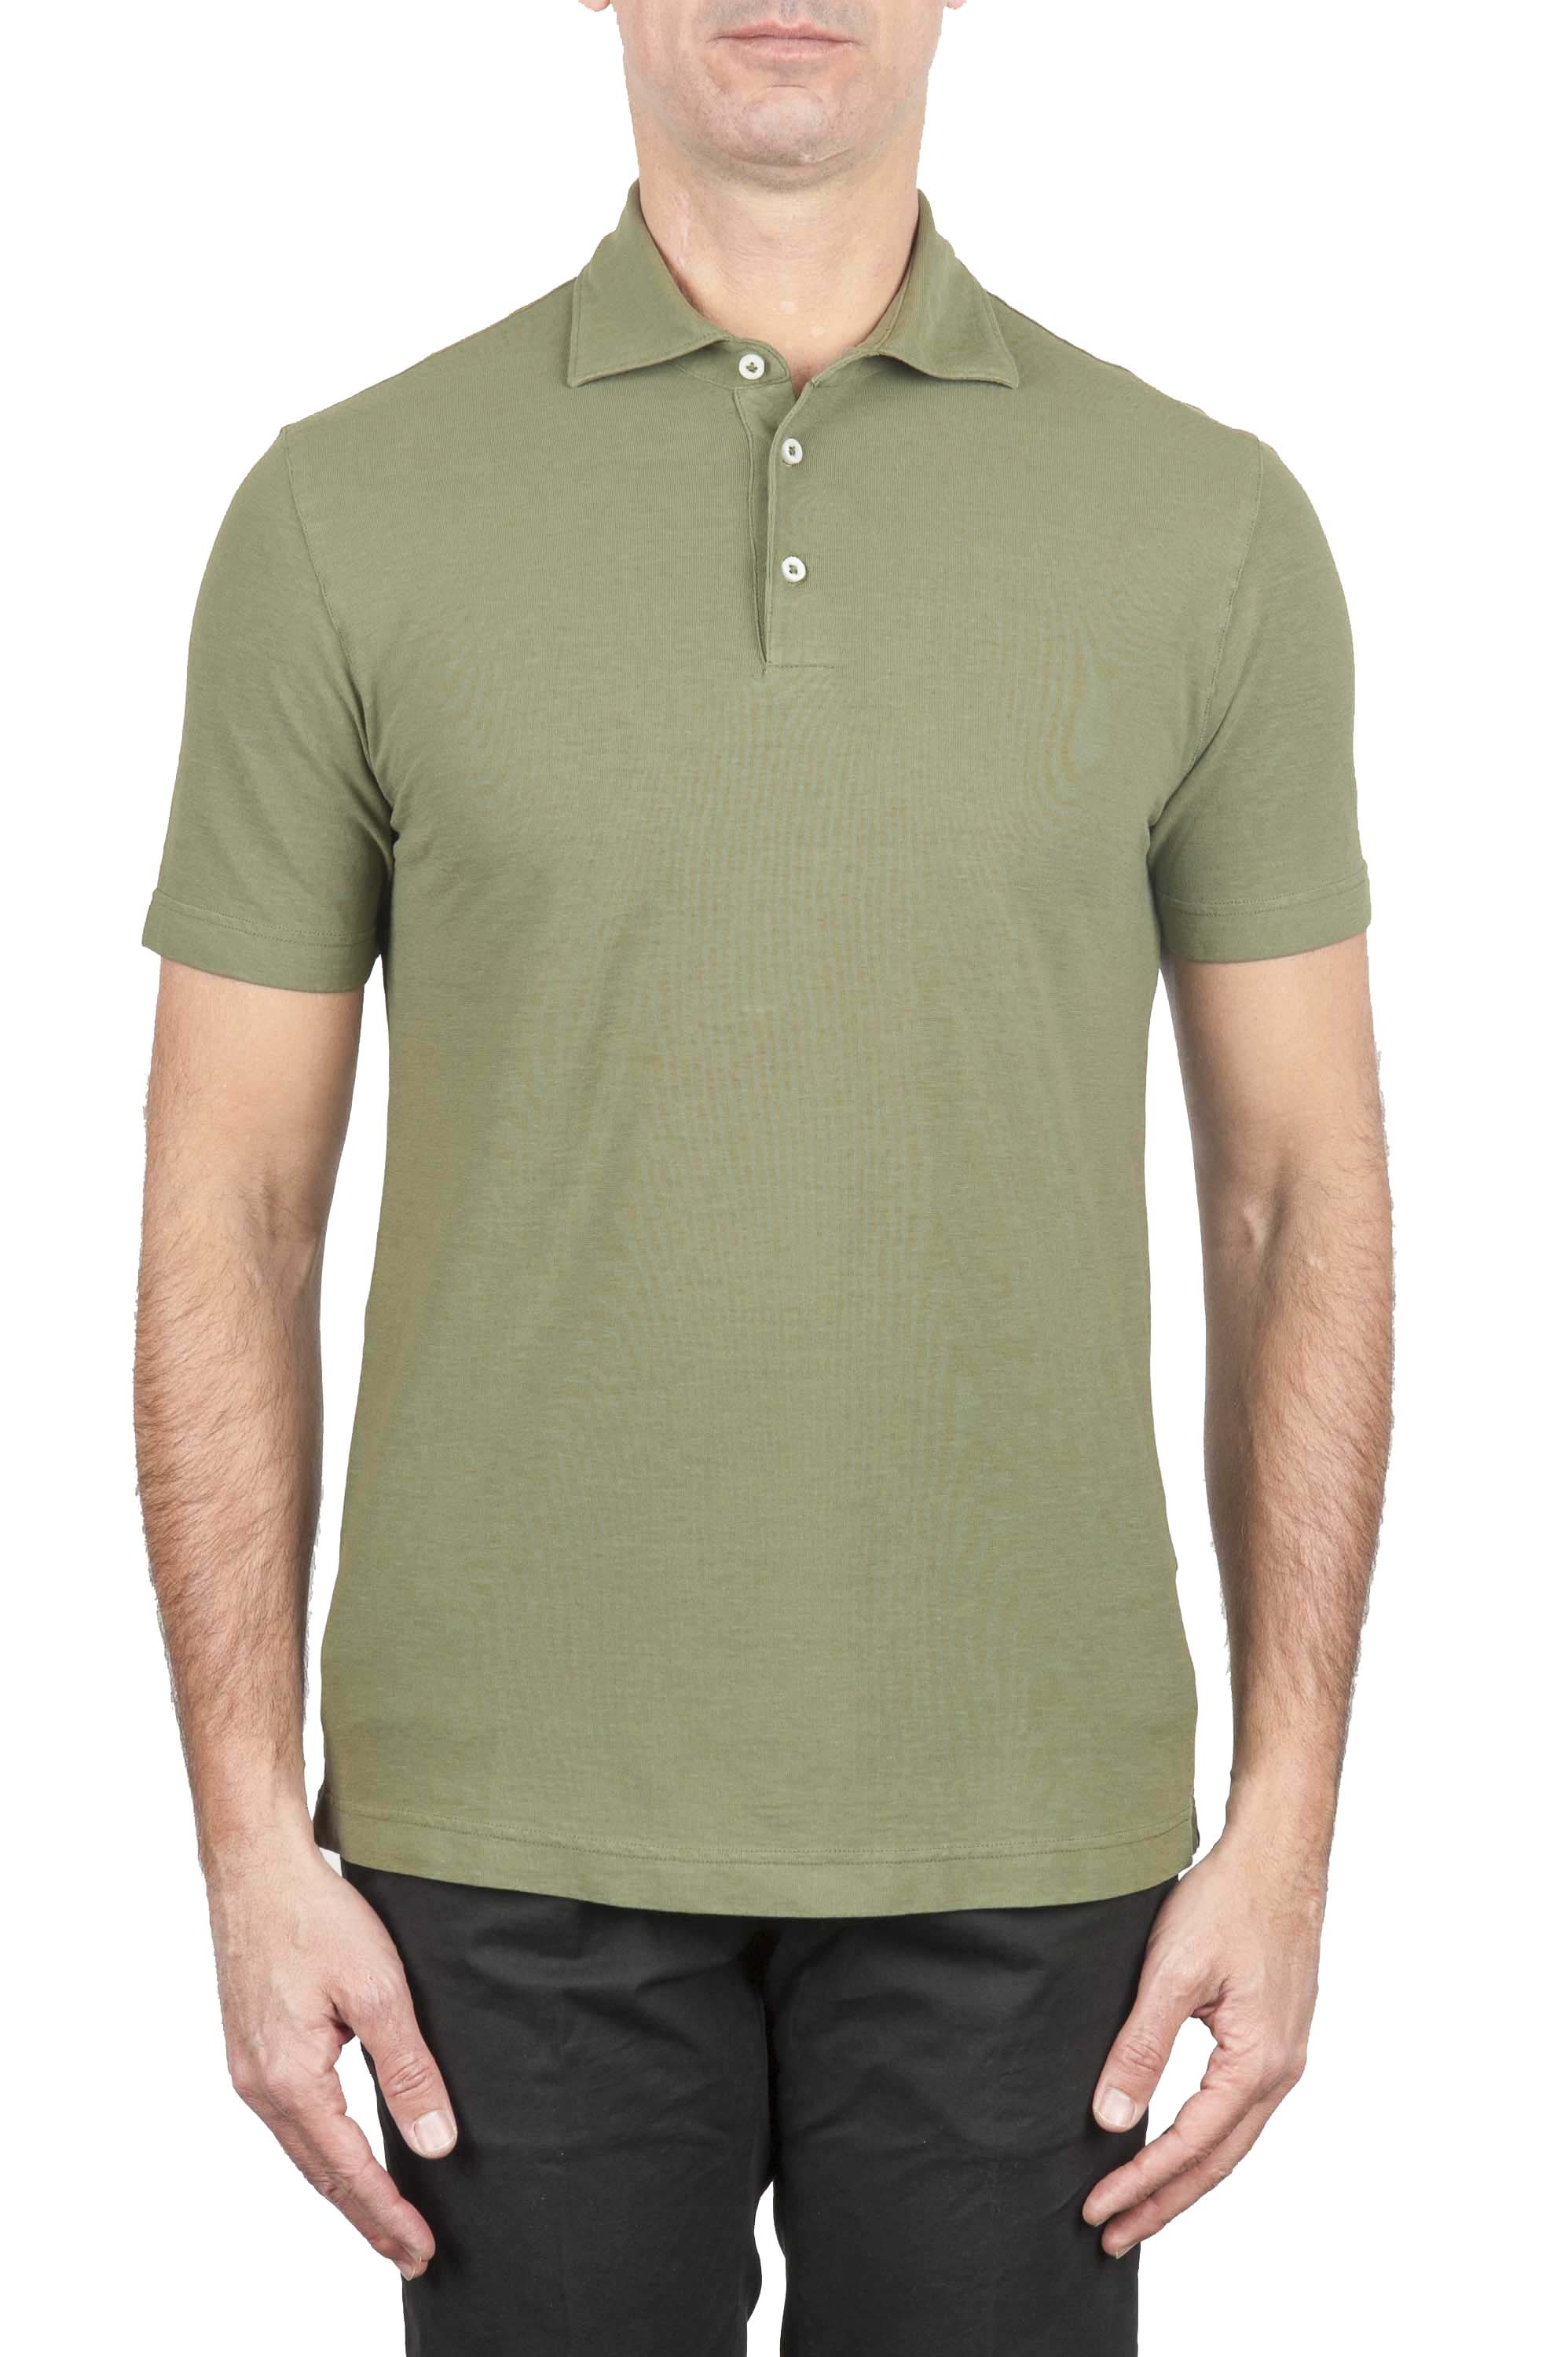 SBU 01694 Classic short sleeve green cotton crepe polo shirt 01